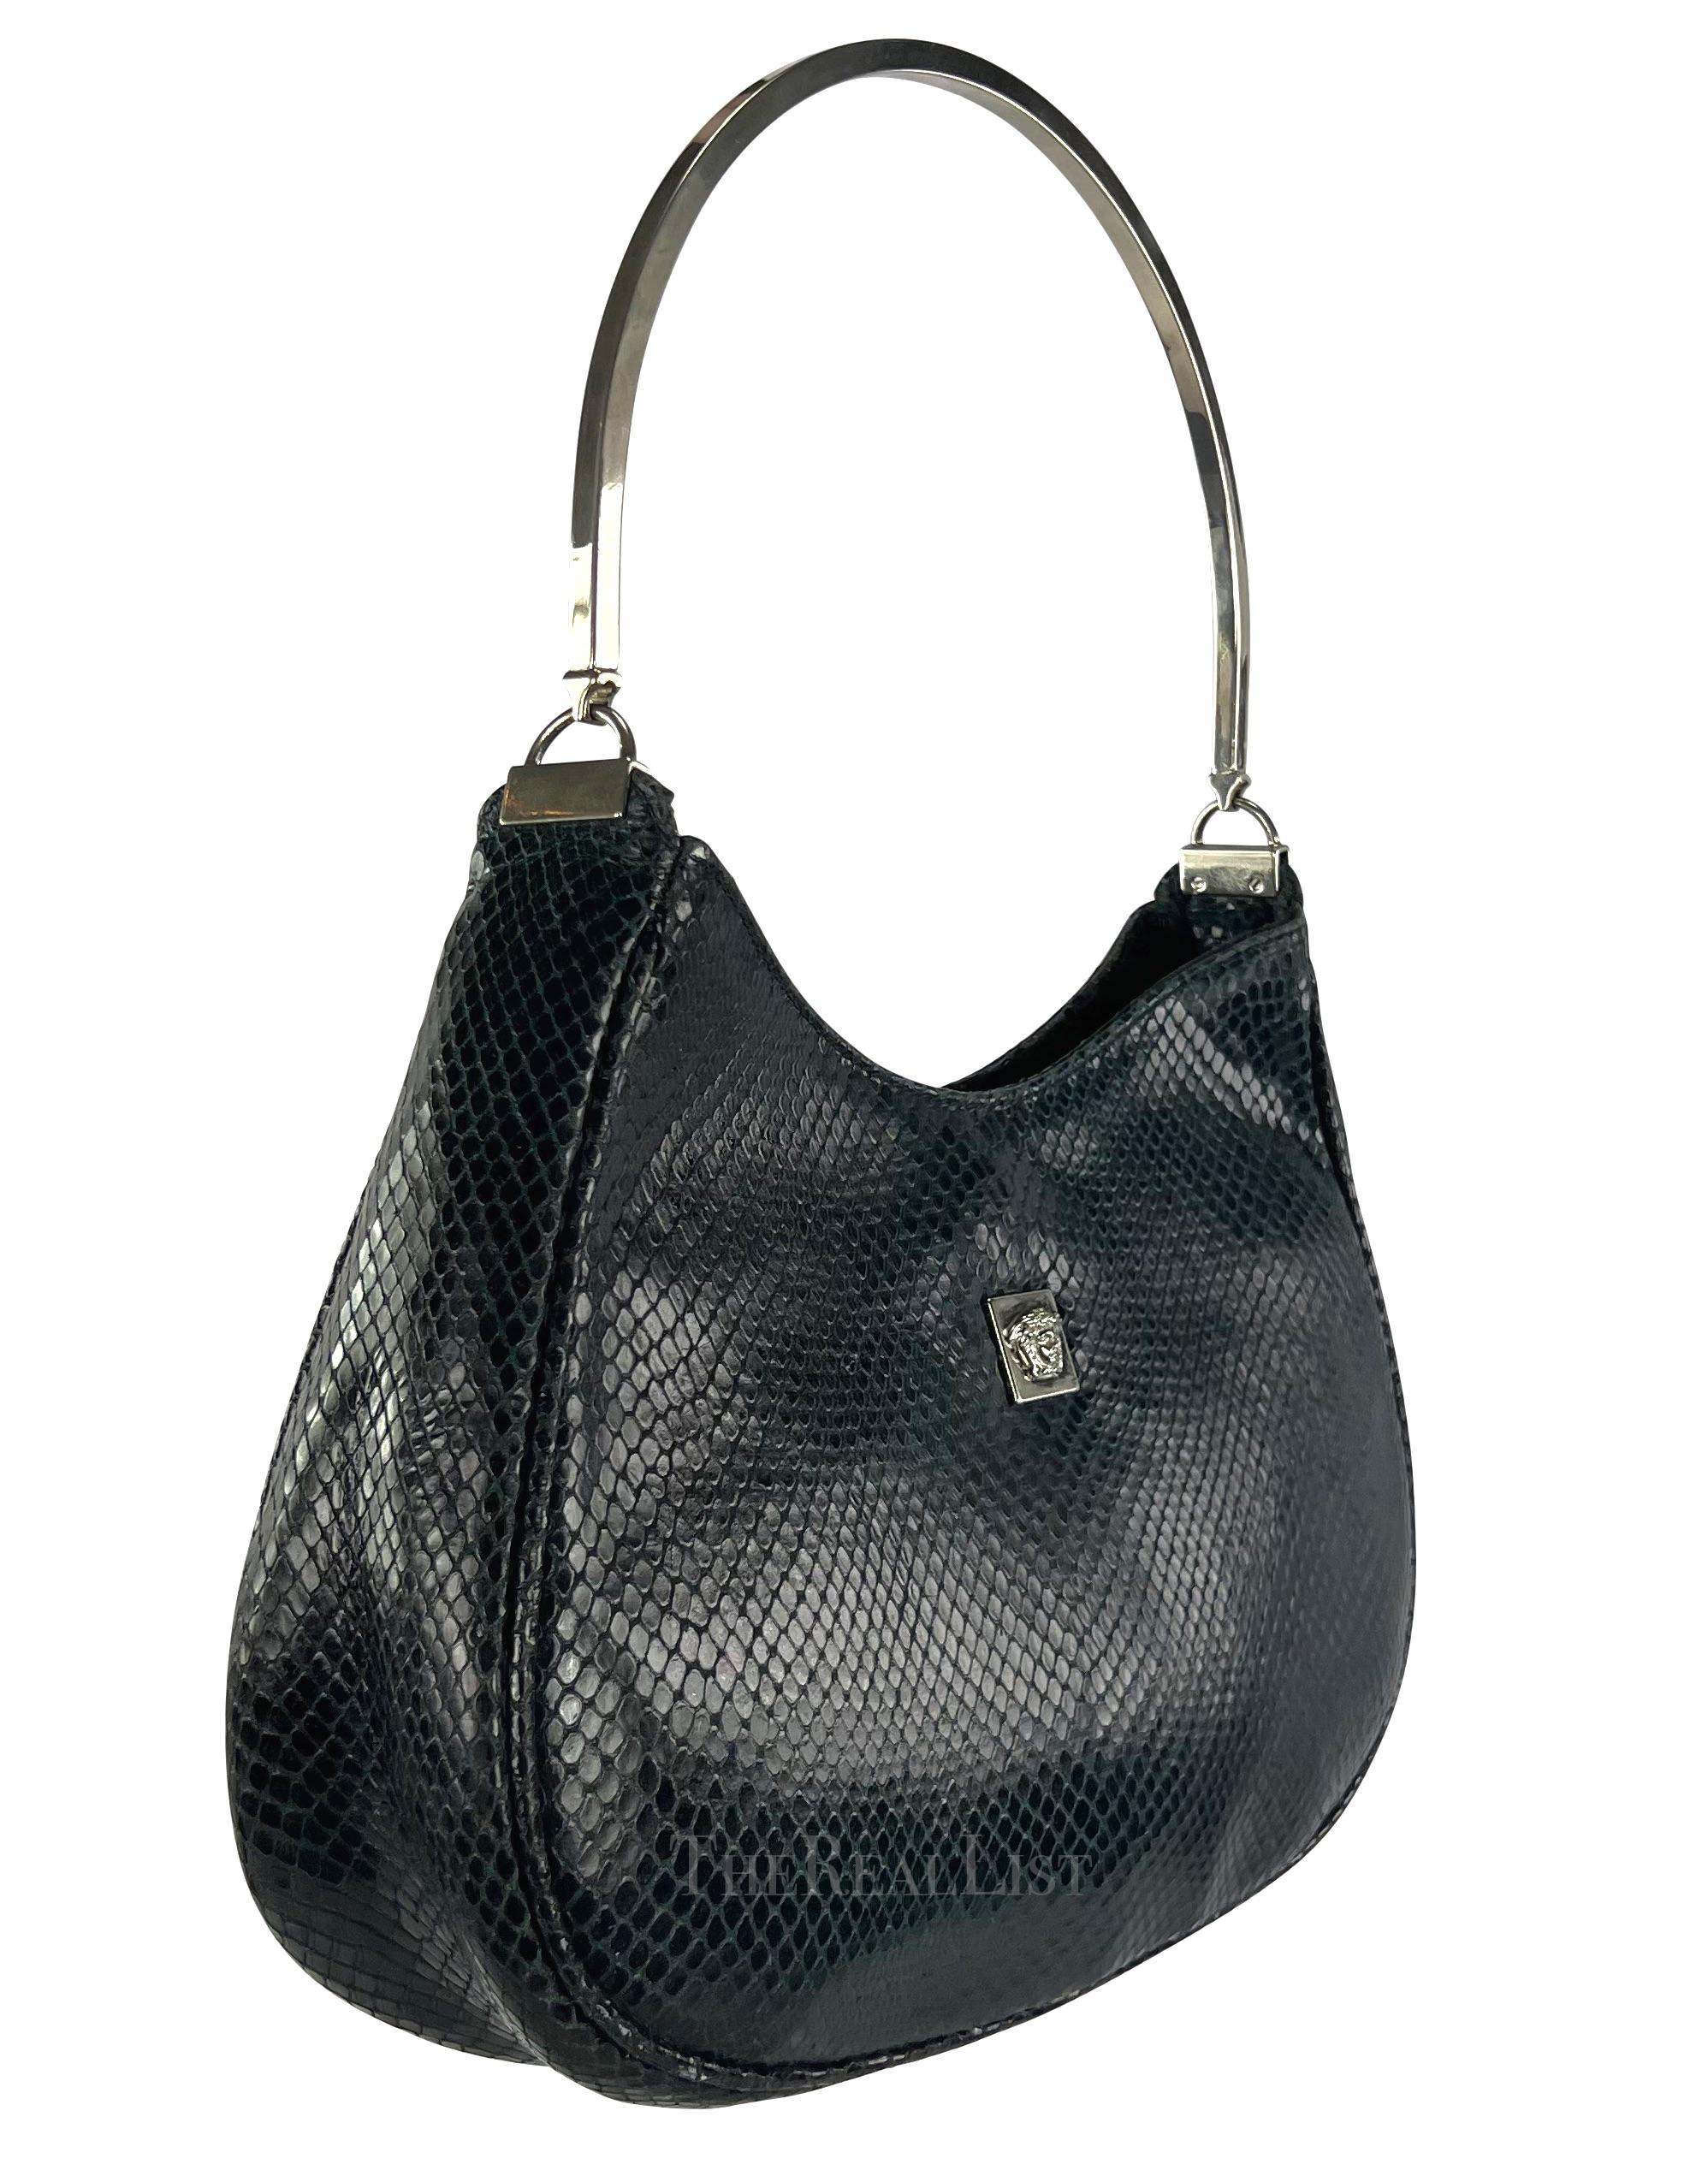 1990s Gianni Versace Couture Teal Python Metal Top Handle Shoulder Bag For Sale 3